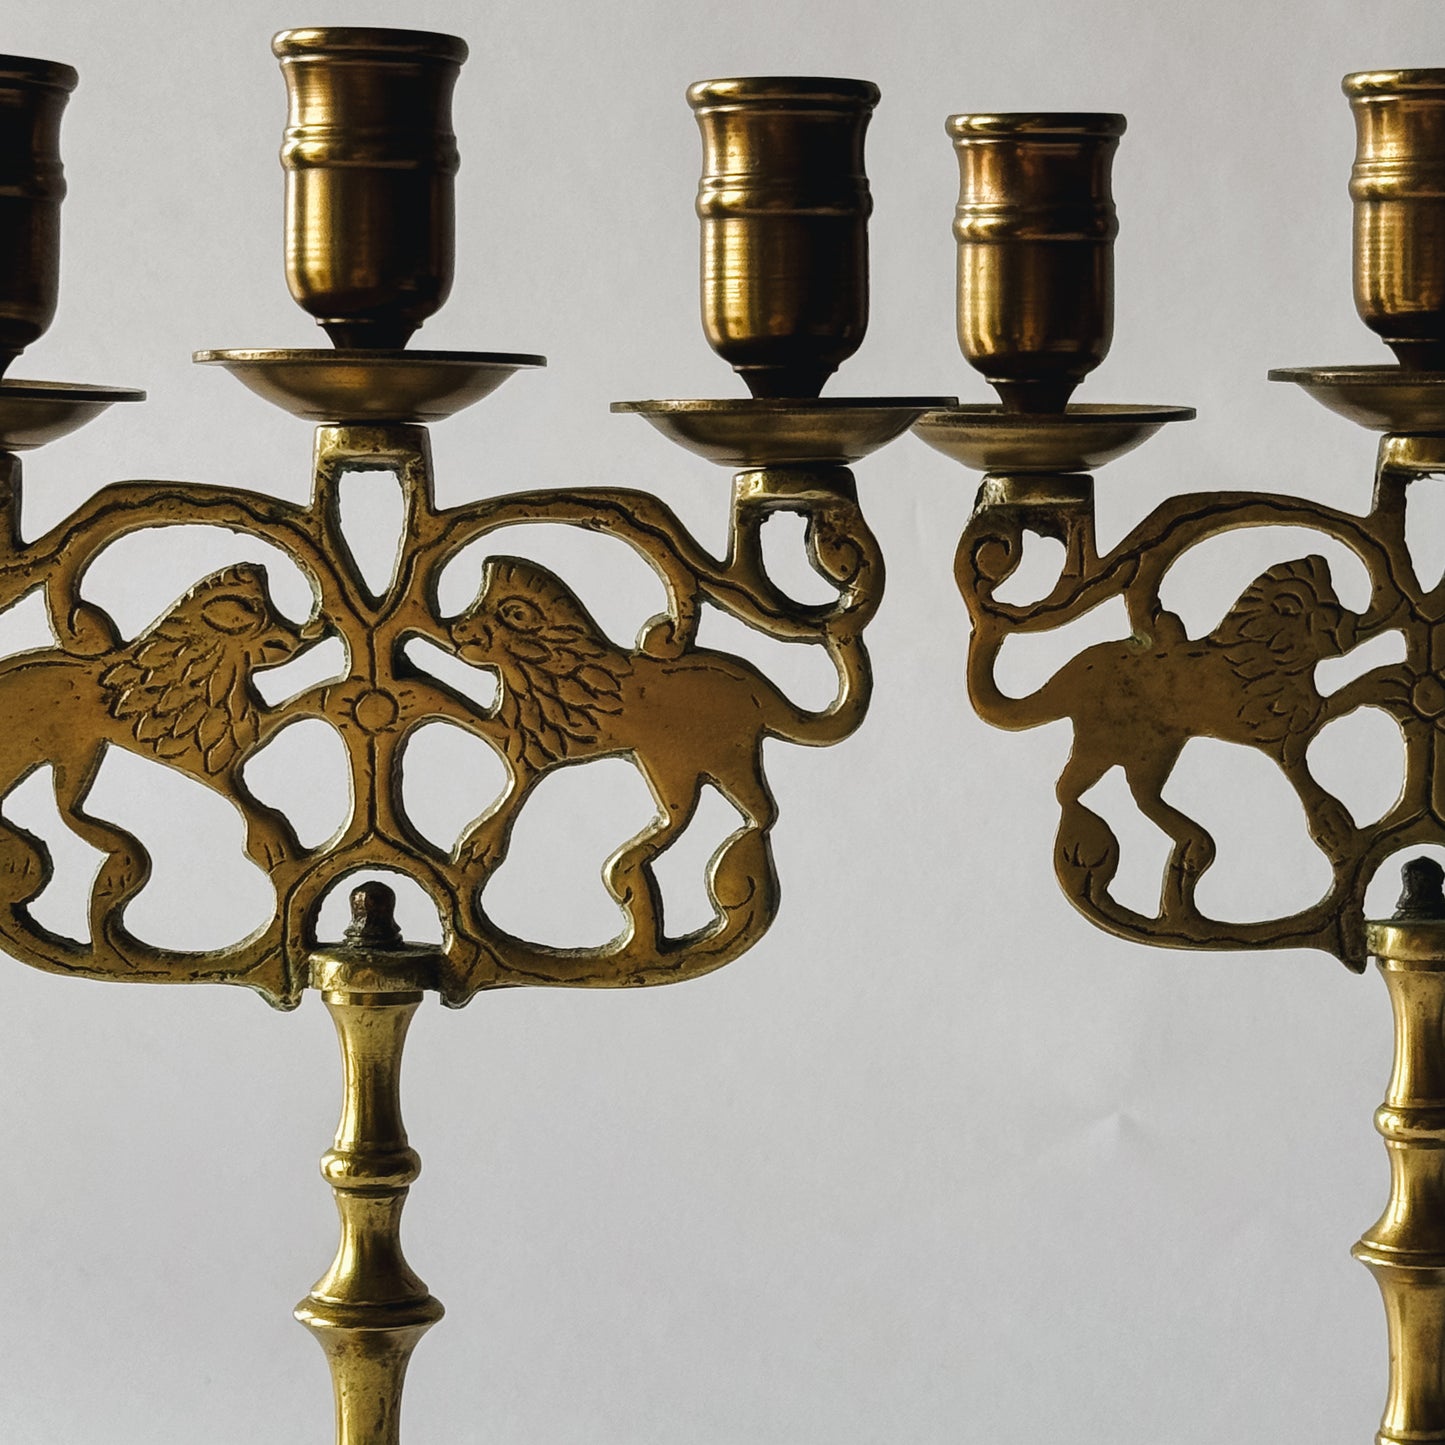 Vintage Solid Brass 'Lions of Judah' Mid-Century Candelabra